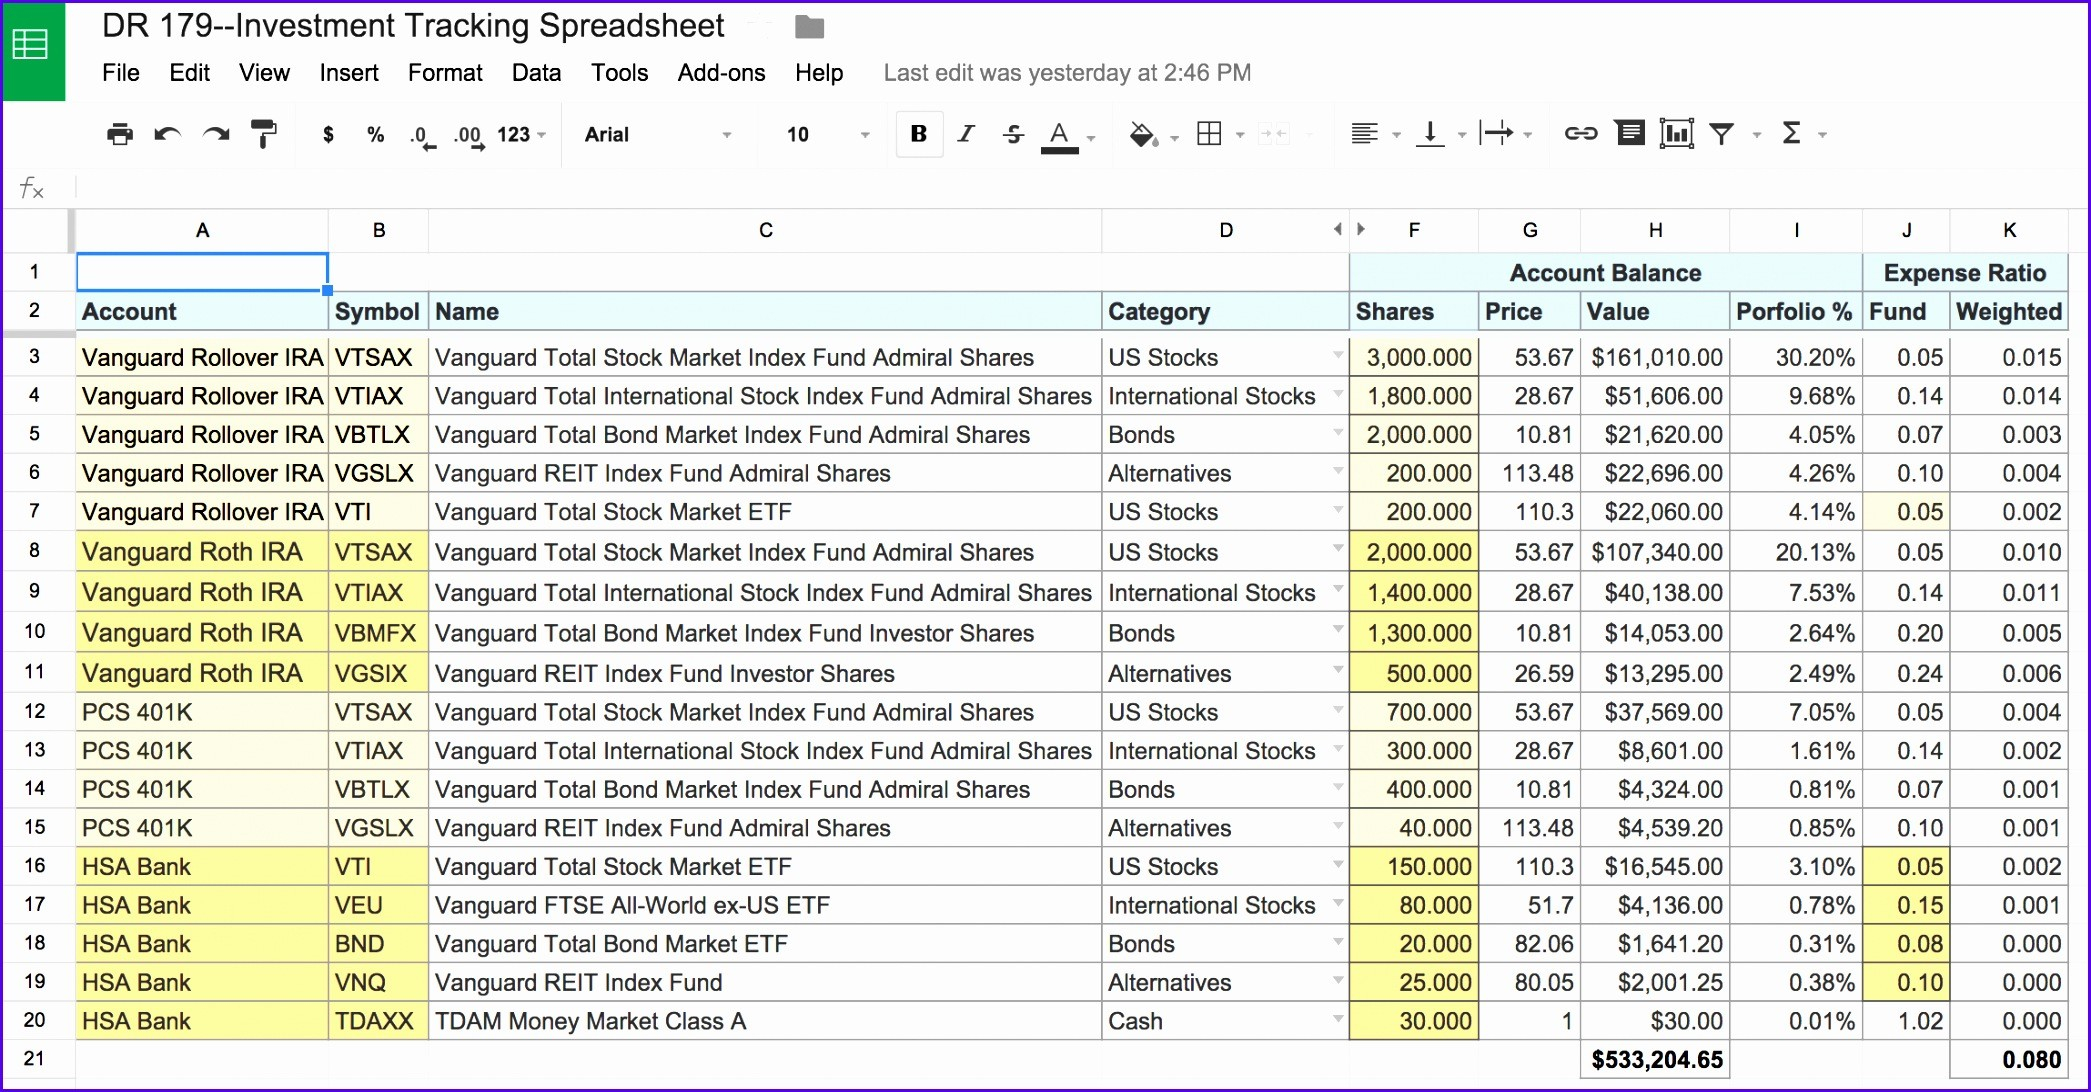 Customer Tracking Spreadsheet Excel db excel com